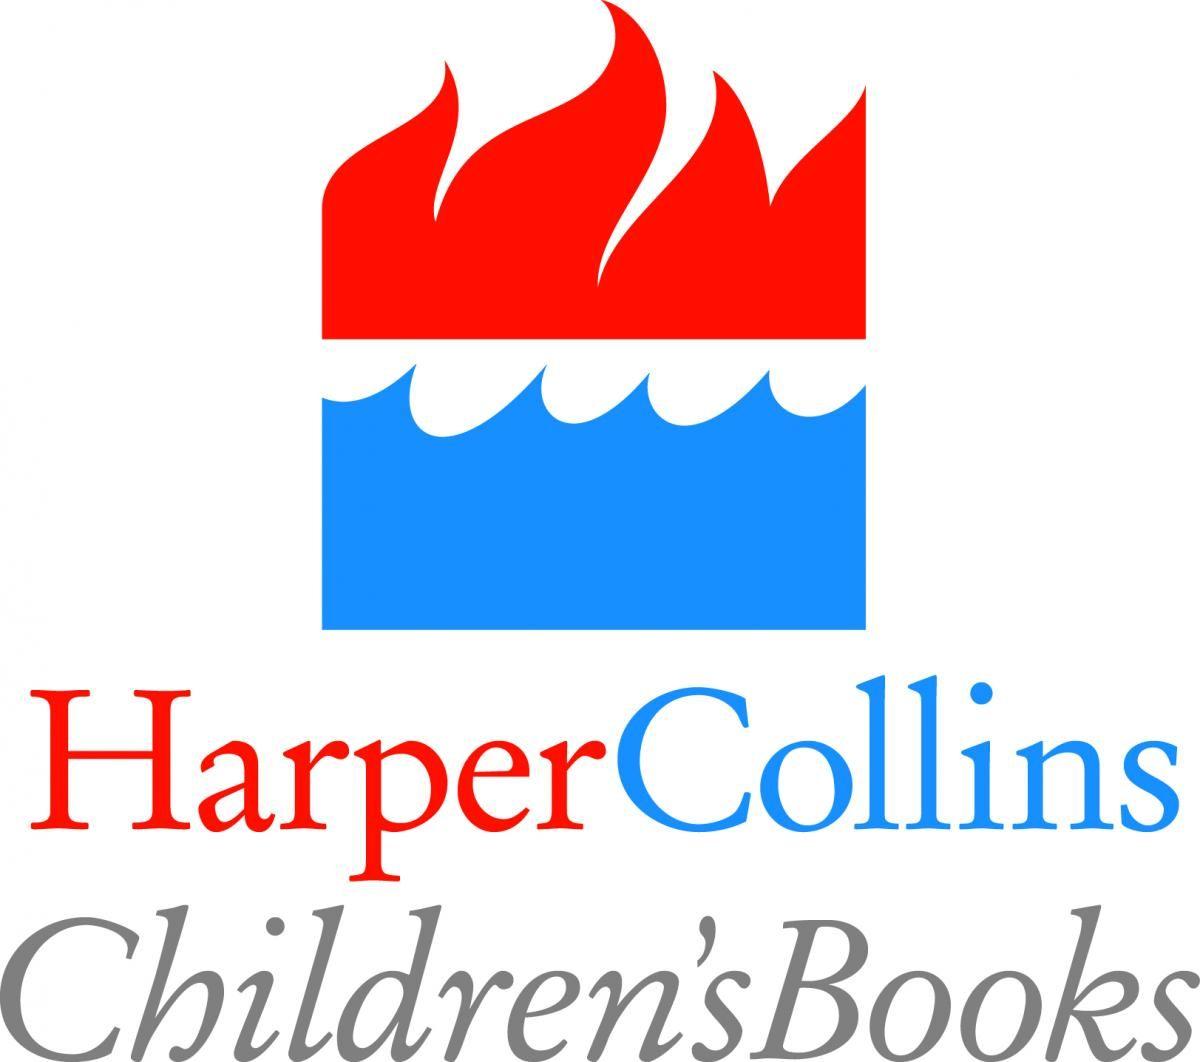 HarperCollins Logo - Harper collins Logos